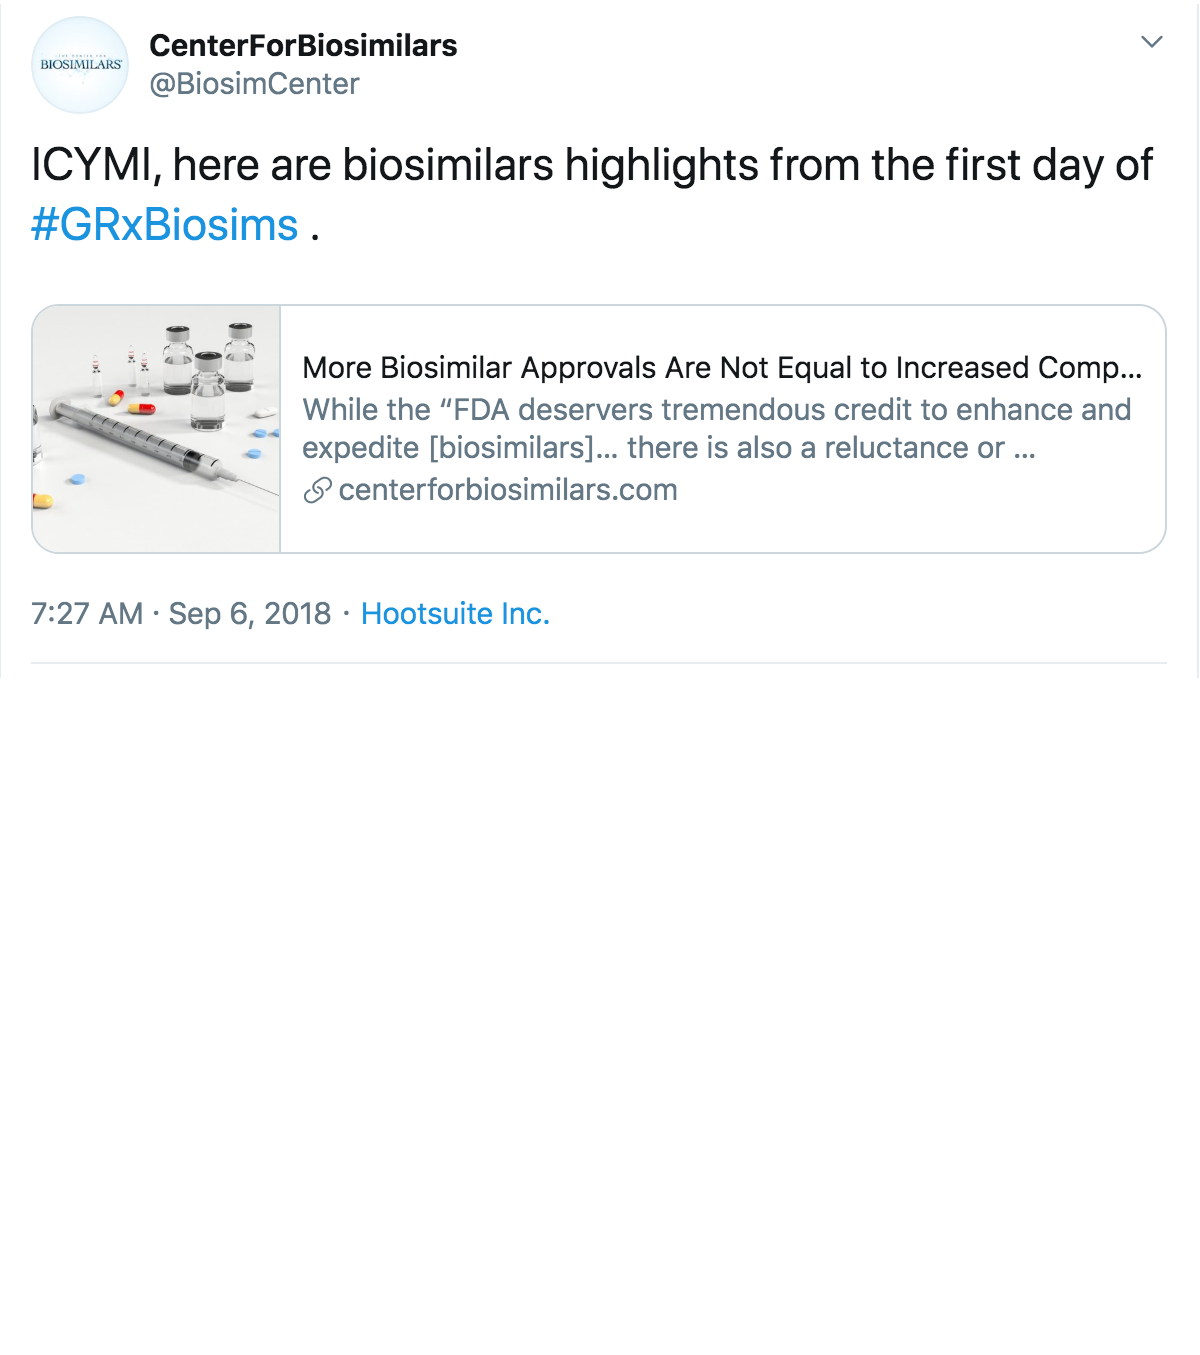 Tweet by Center for Biosimilars